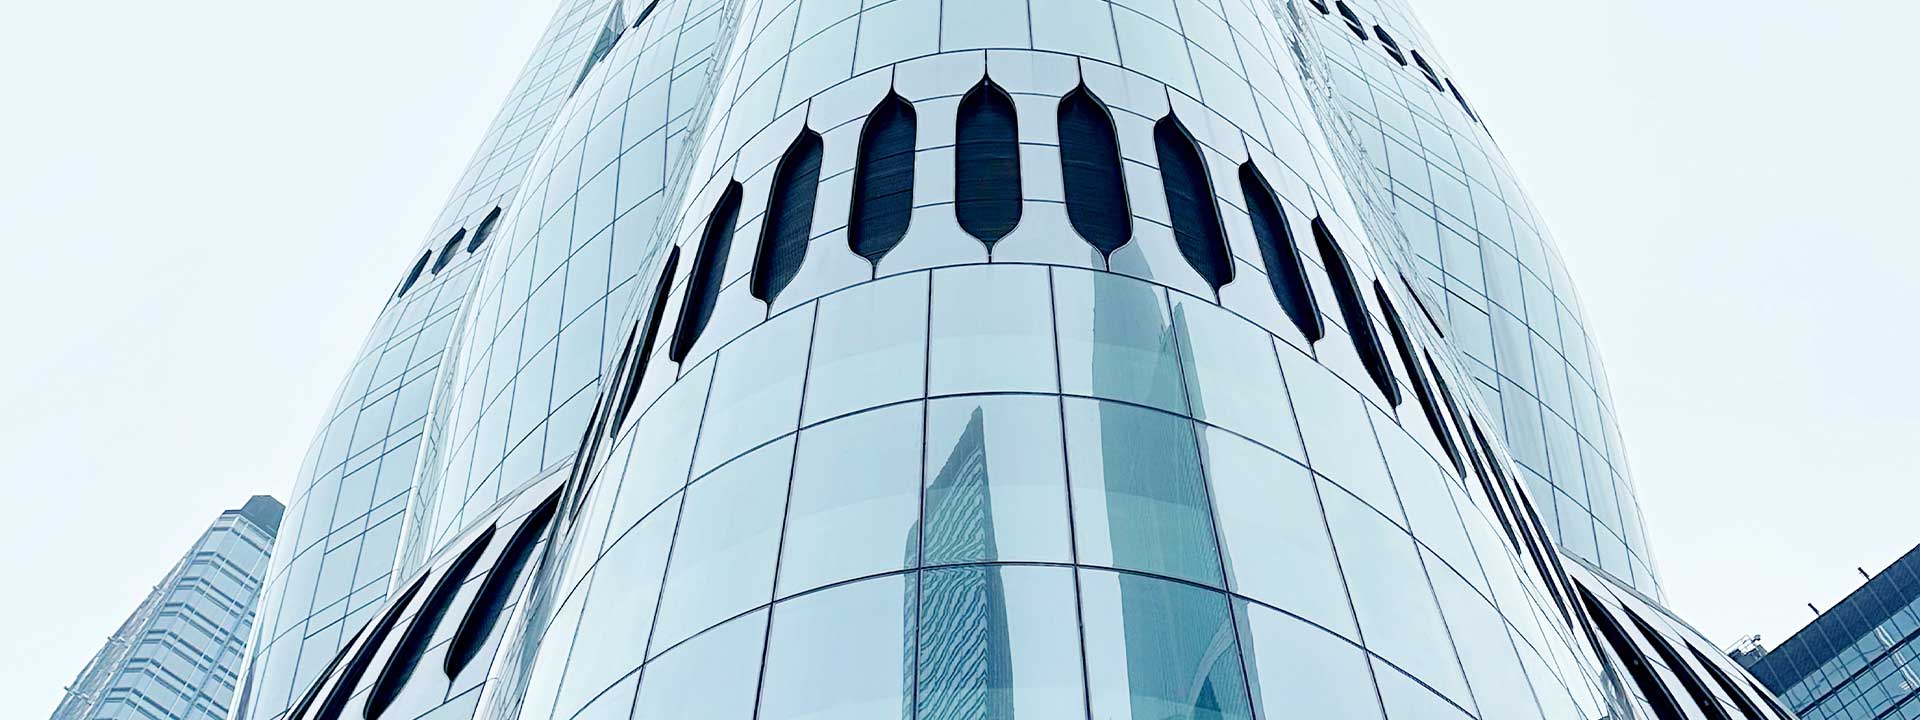 Curved facade glass of The Henderson. ©sedak